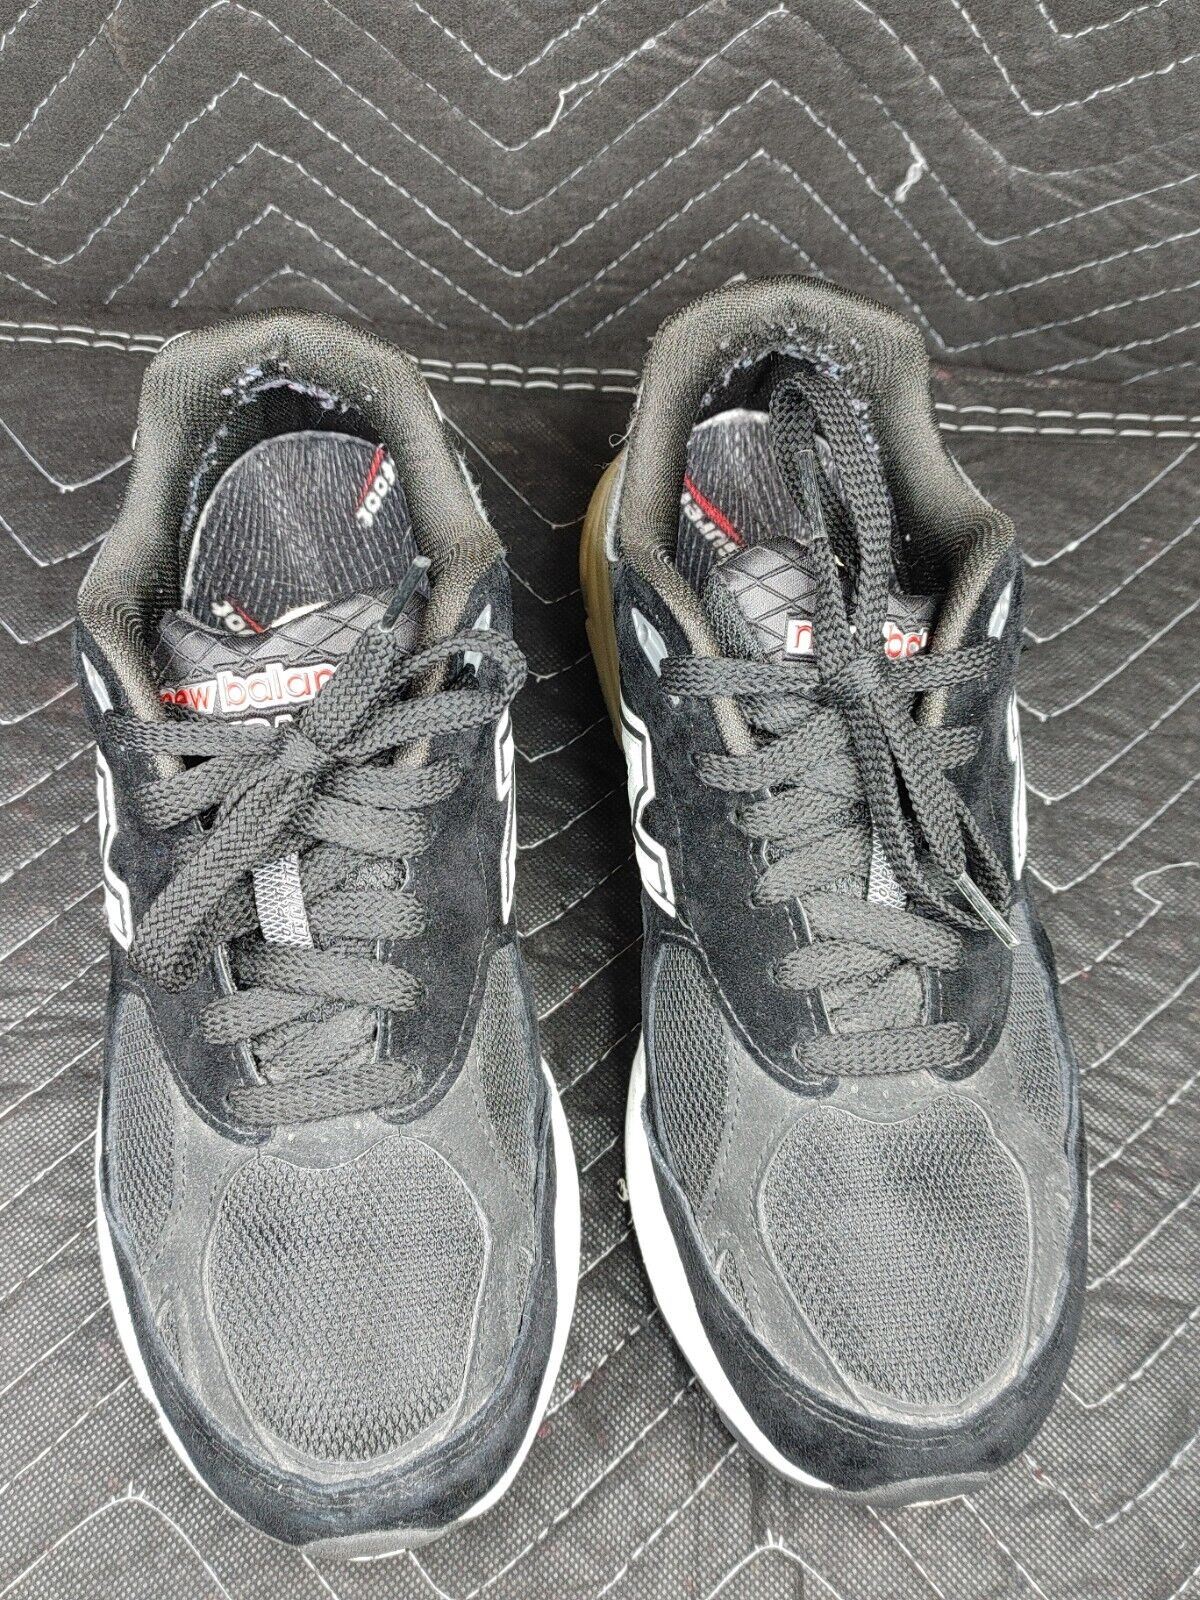 New Balance 990v3 W990BK3 Black Suede Running Shoes USA 990 v3 Women’s Size 9 D